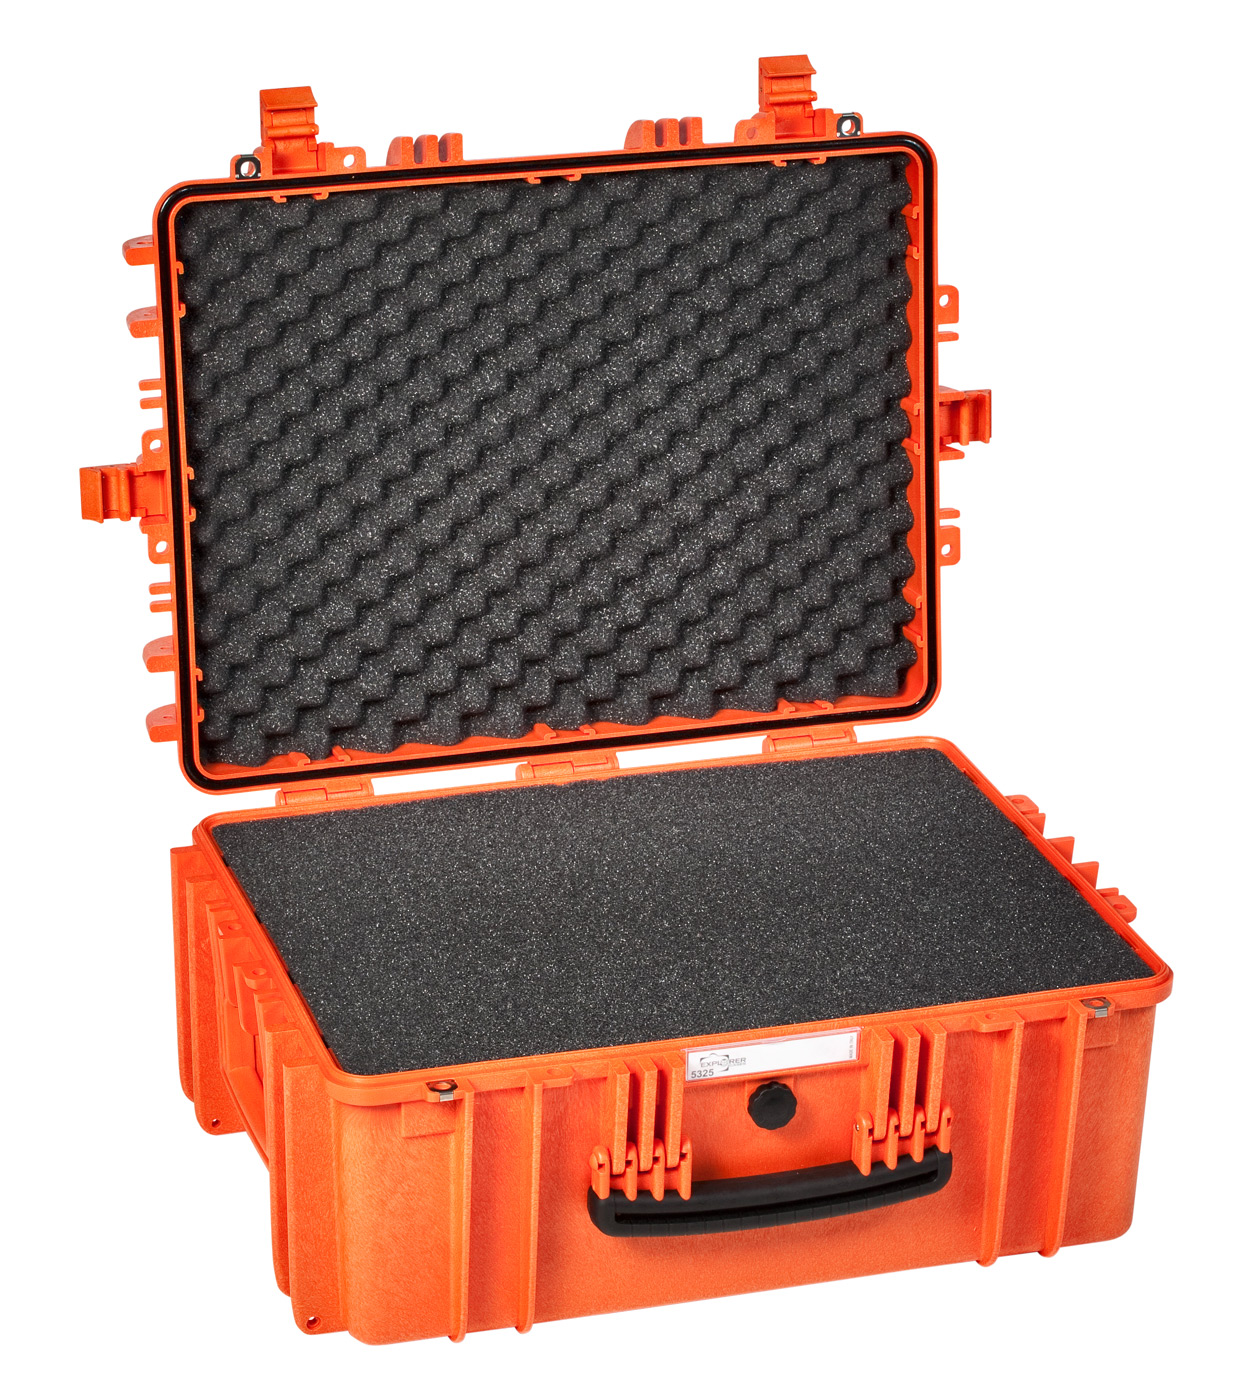 Maleta Explorer Cases 5325 color naranja | Maletas Estancas